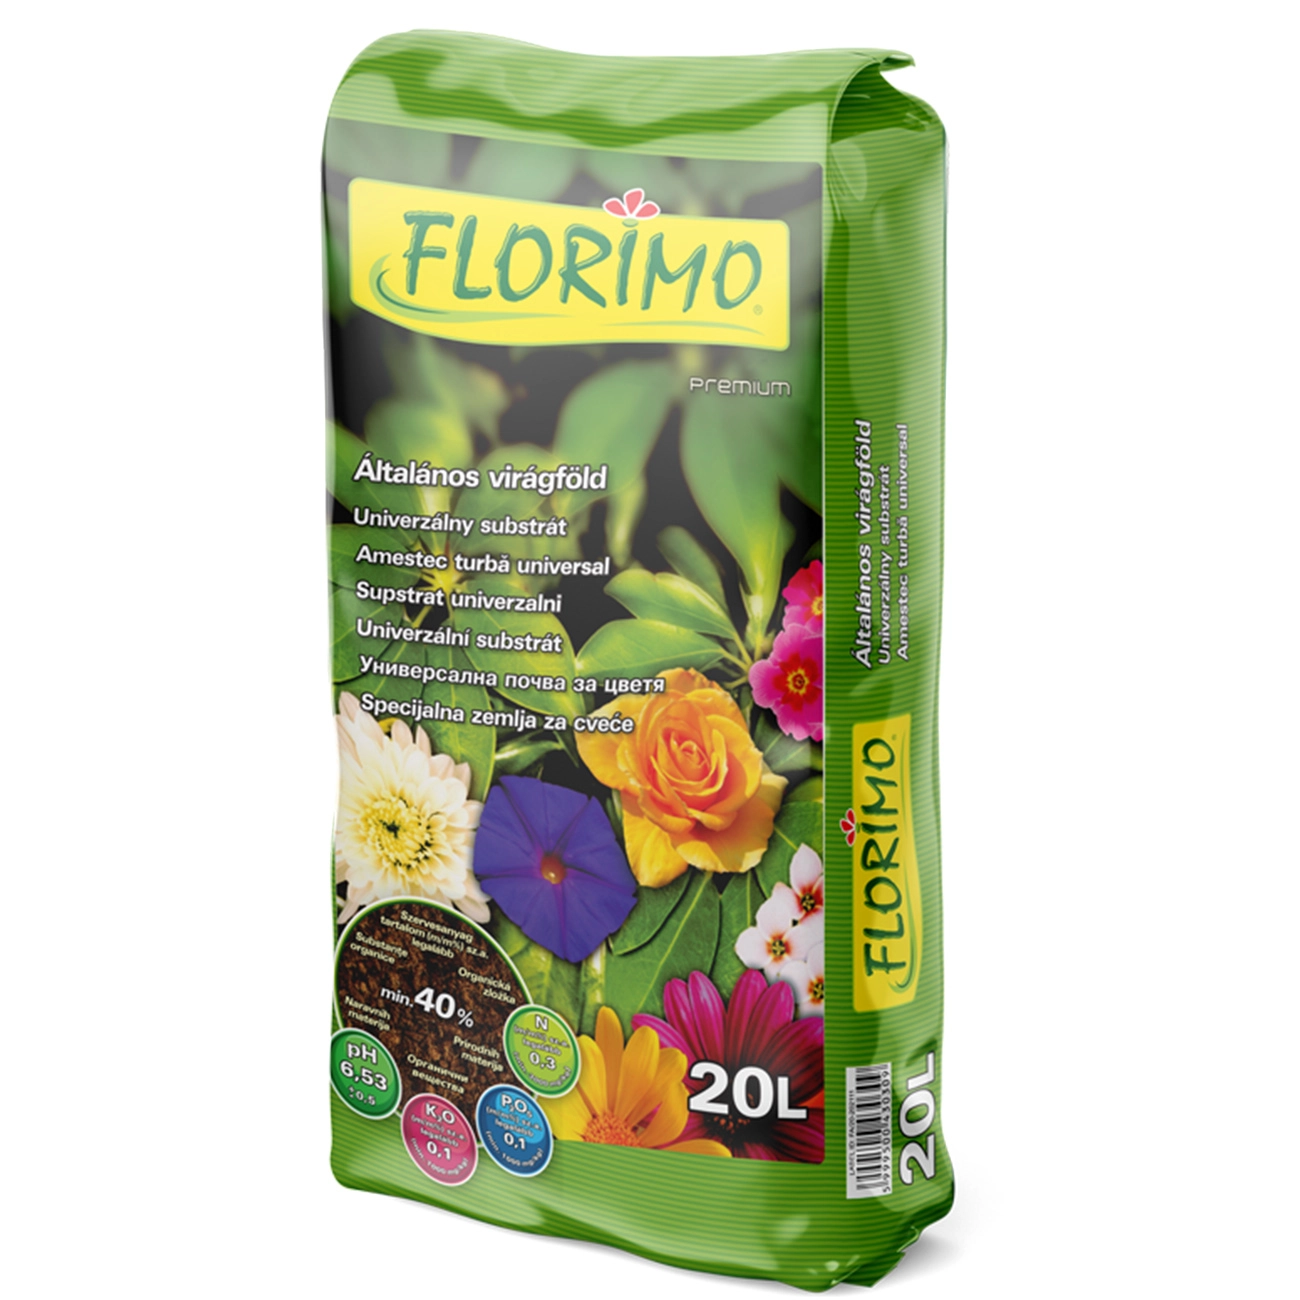 Florimo® általános virágföld 20L